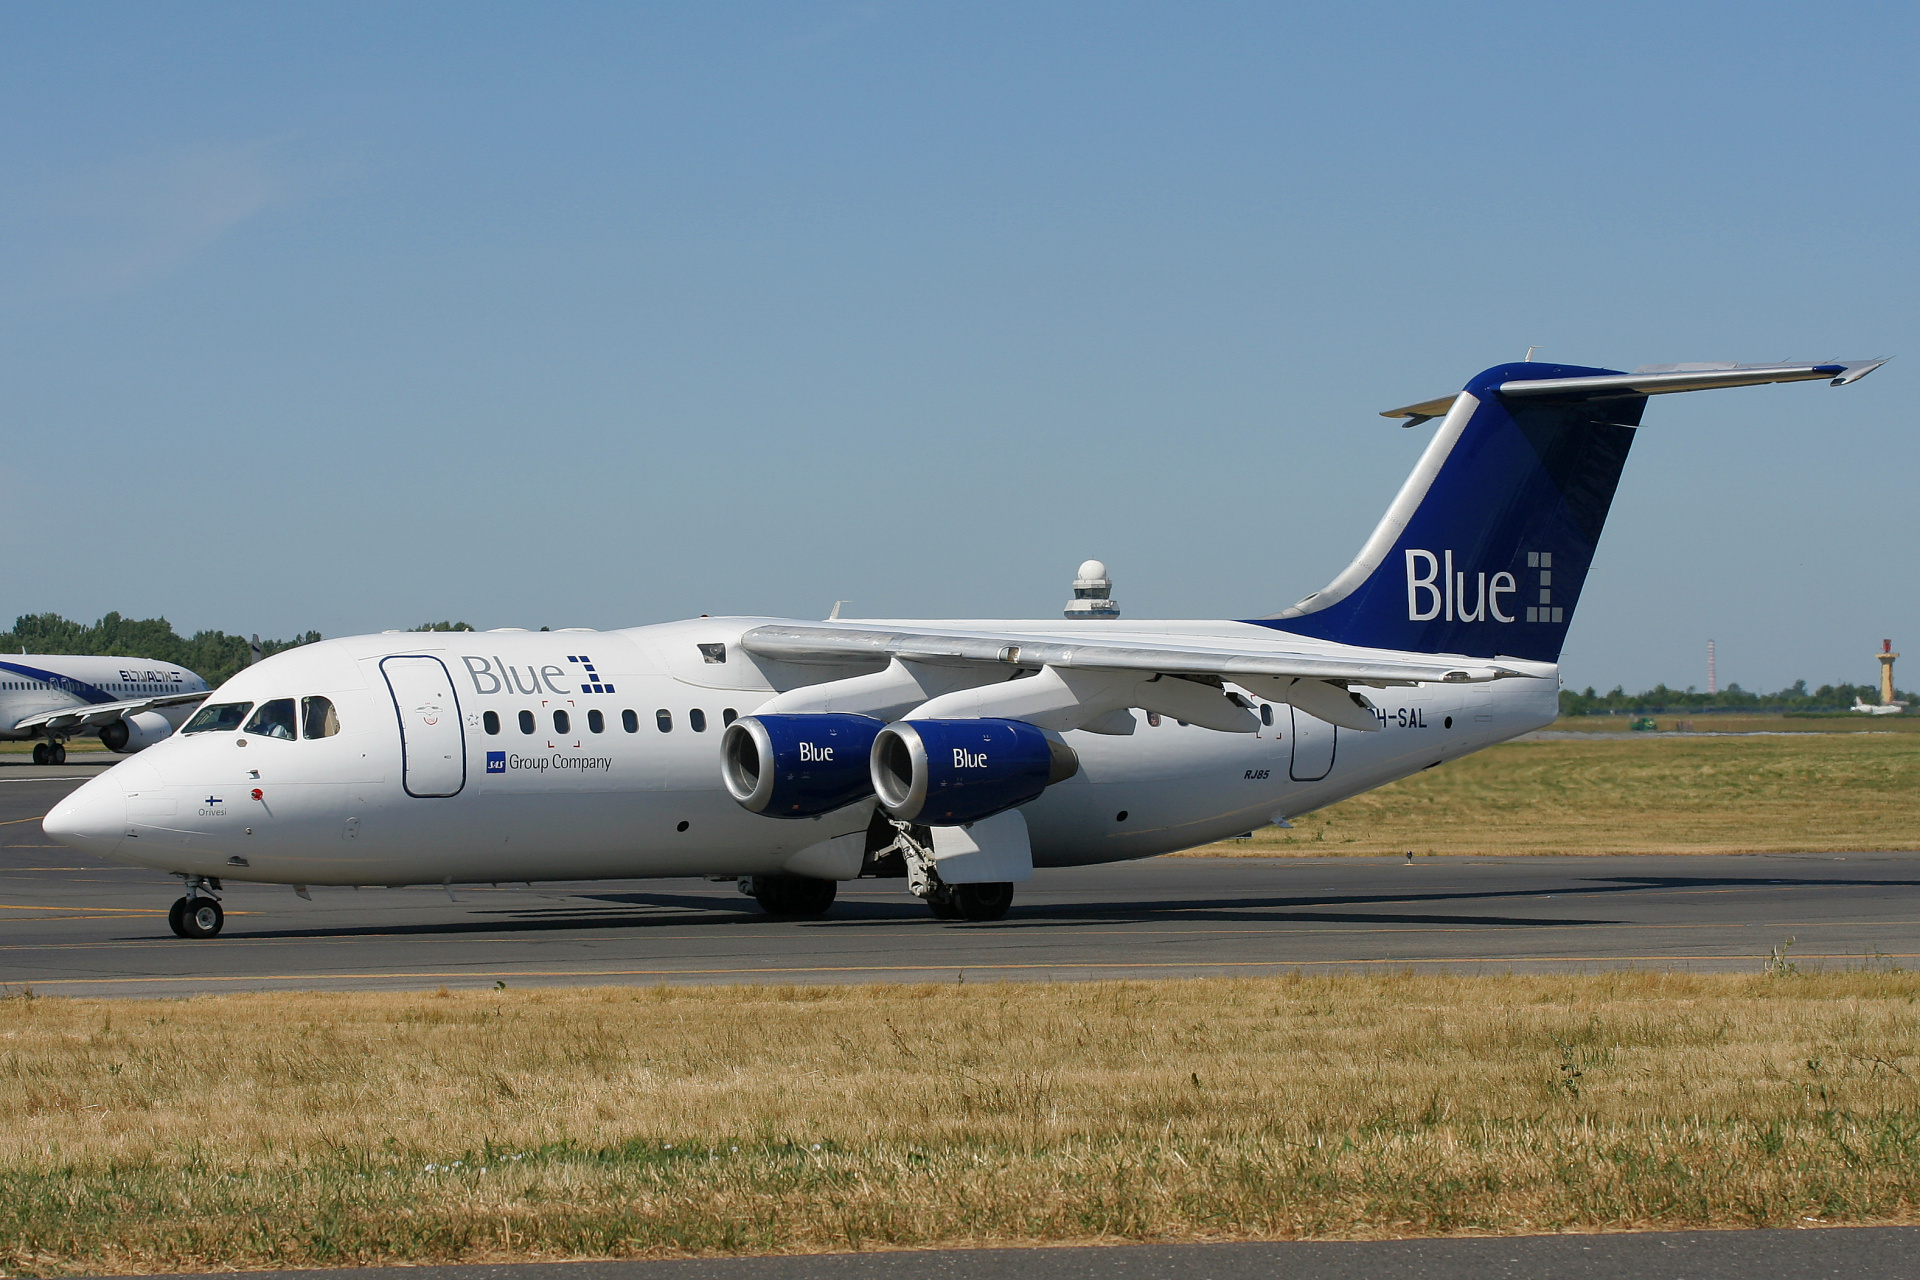 OH-SAL, Blue1 (Samoloty » Spotting na EPWA » BAe 146 i pochodne wersje » Avro RJ85)